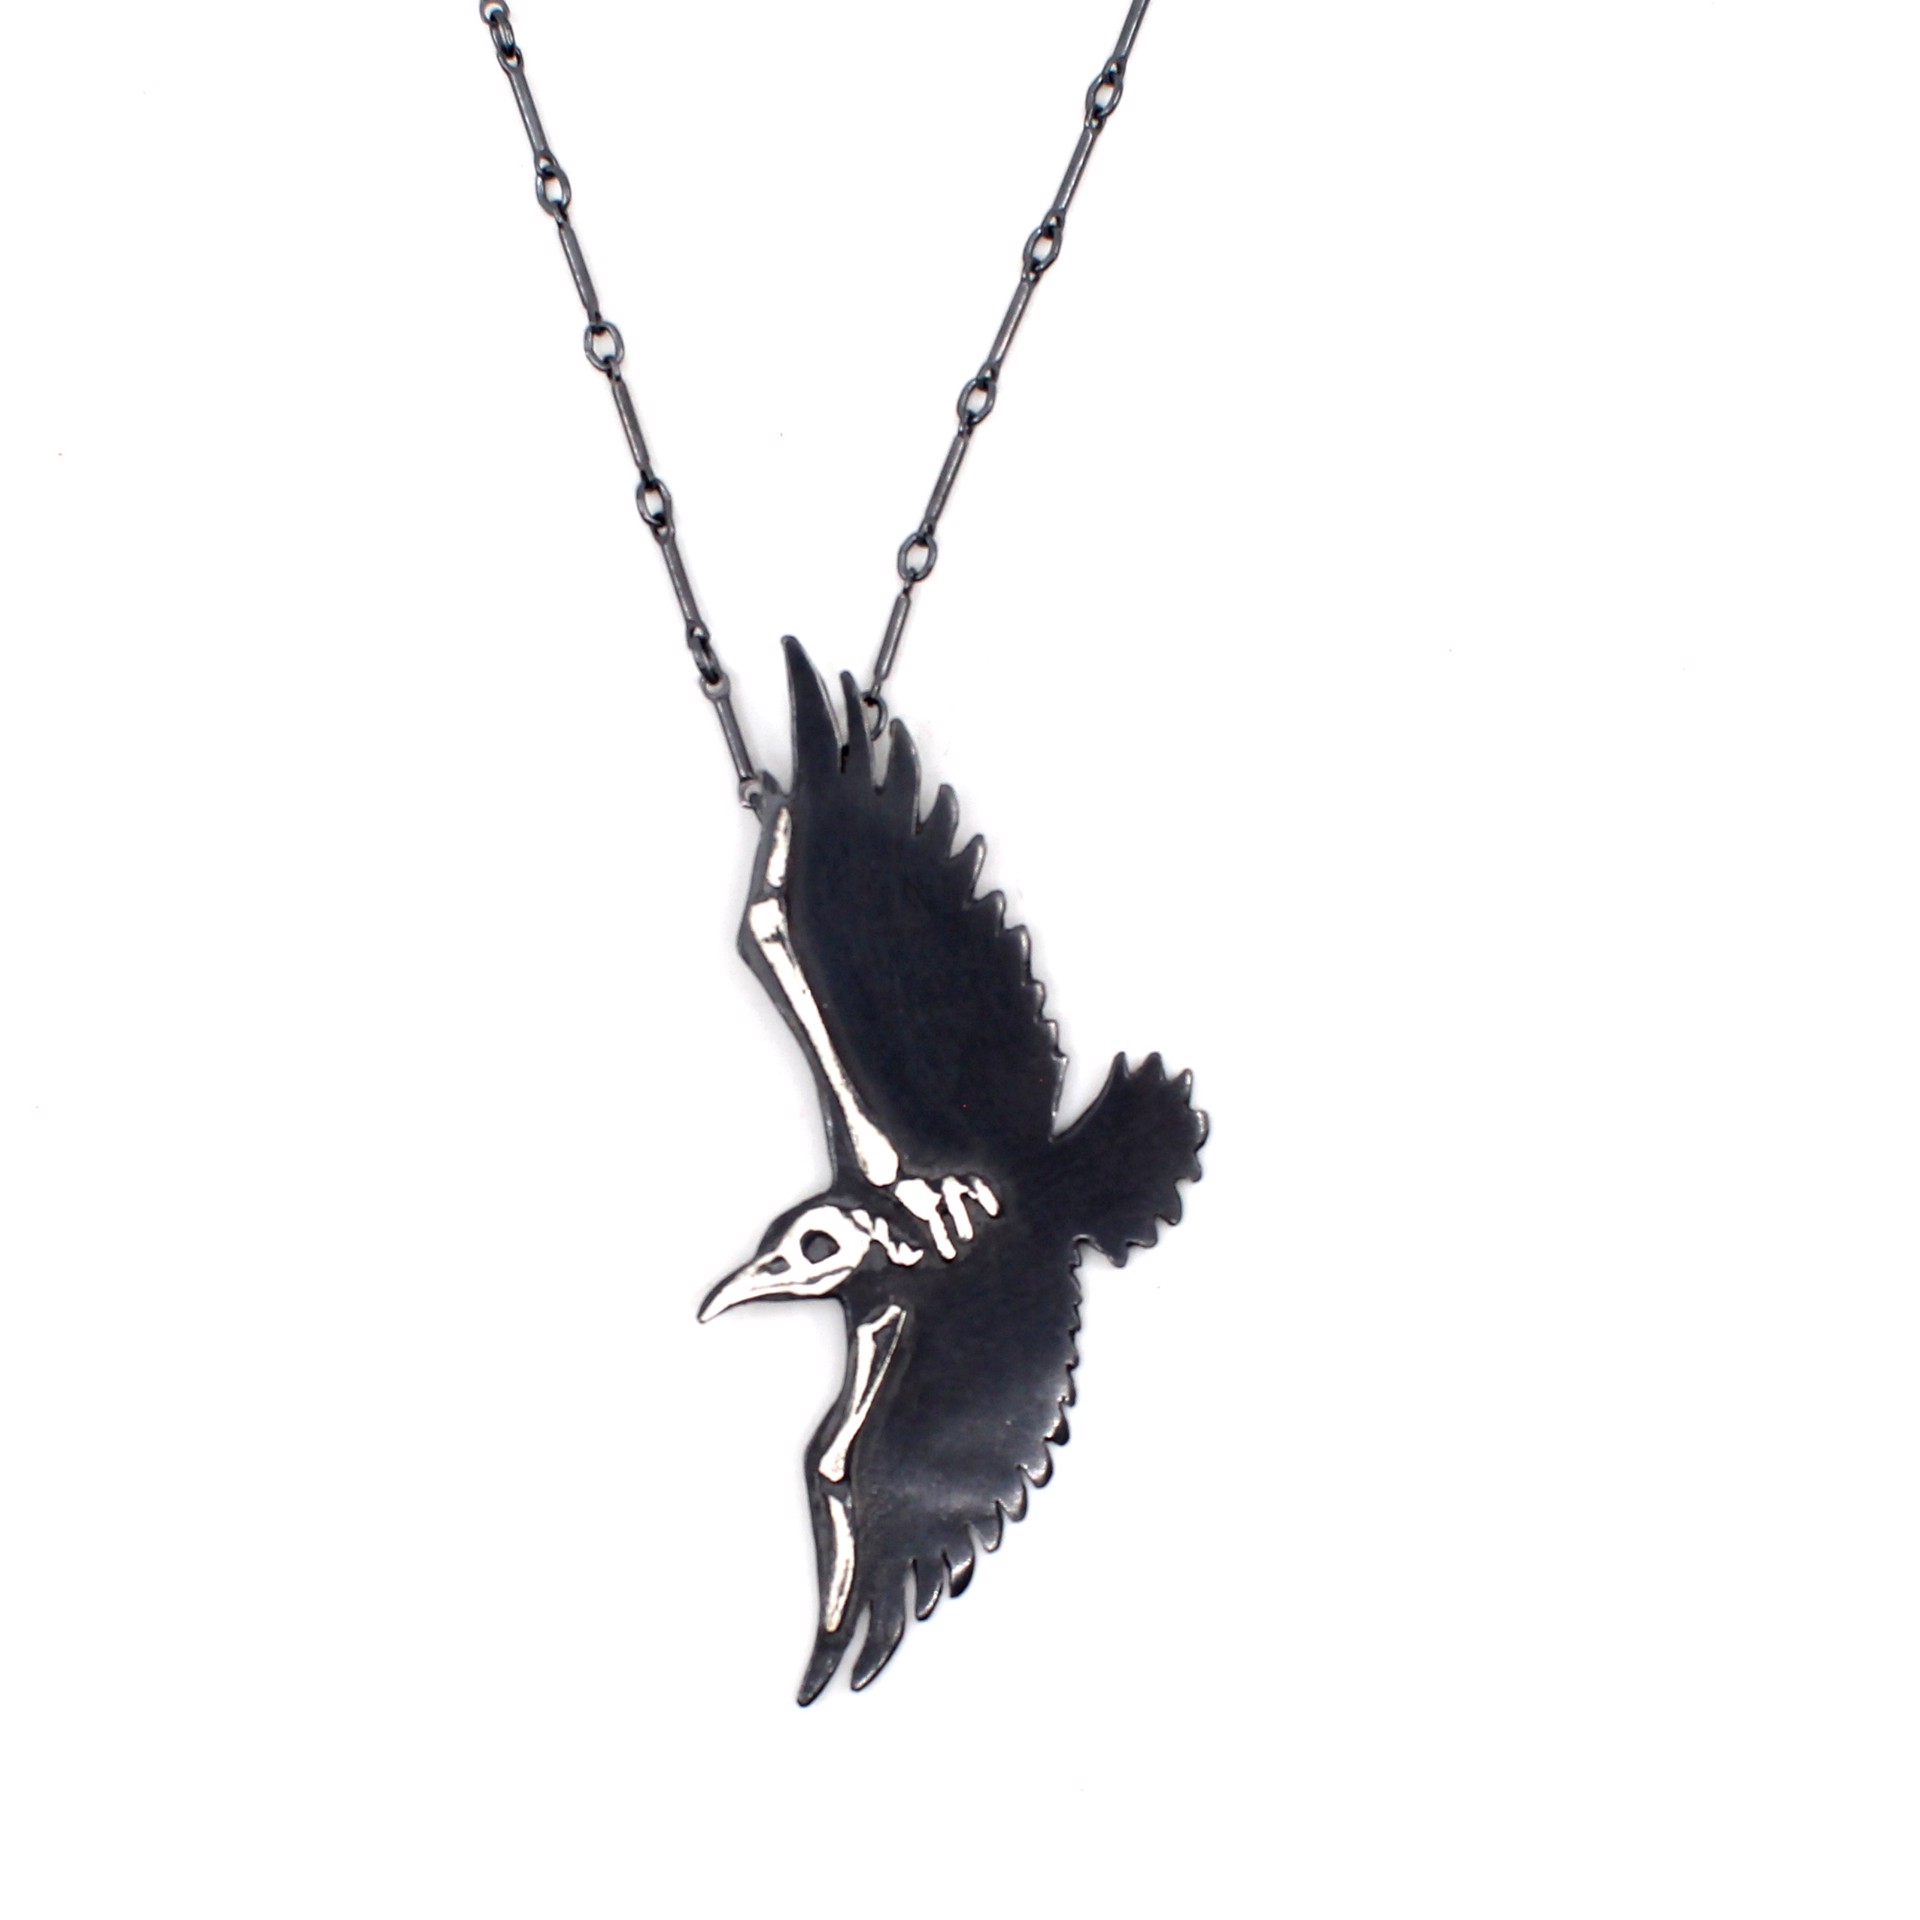 Skeletal Raven Necklace by Susan Elnora